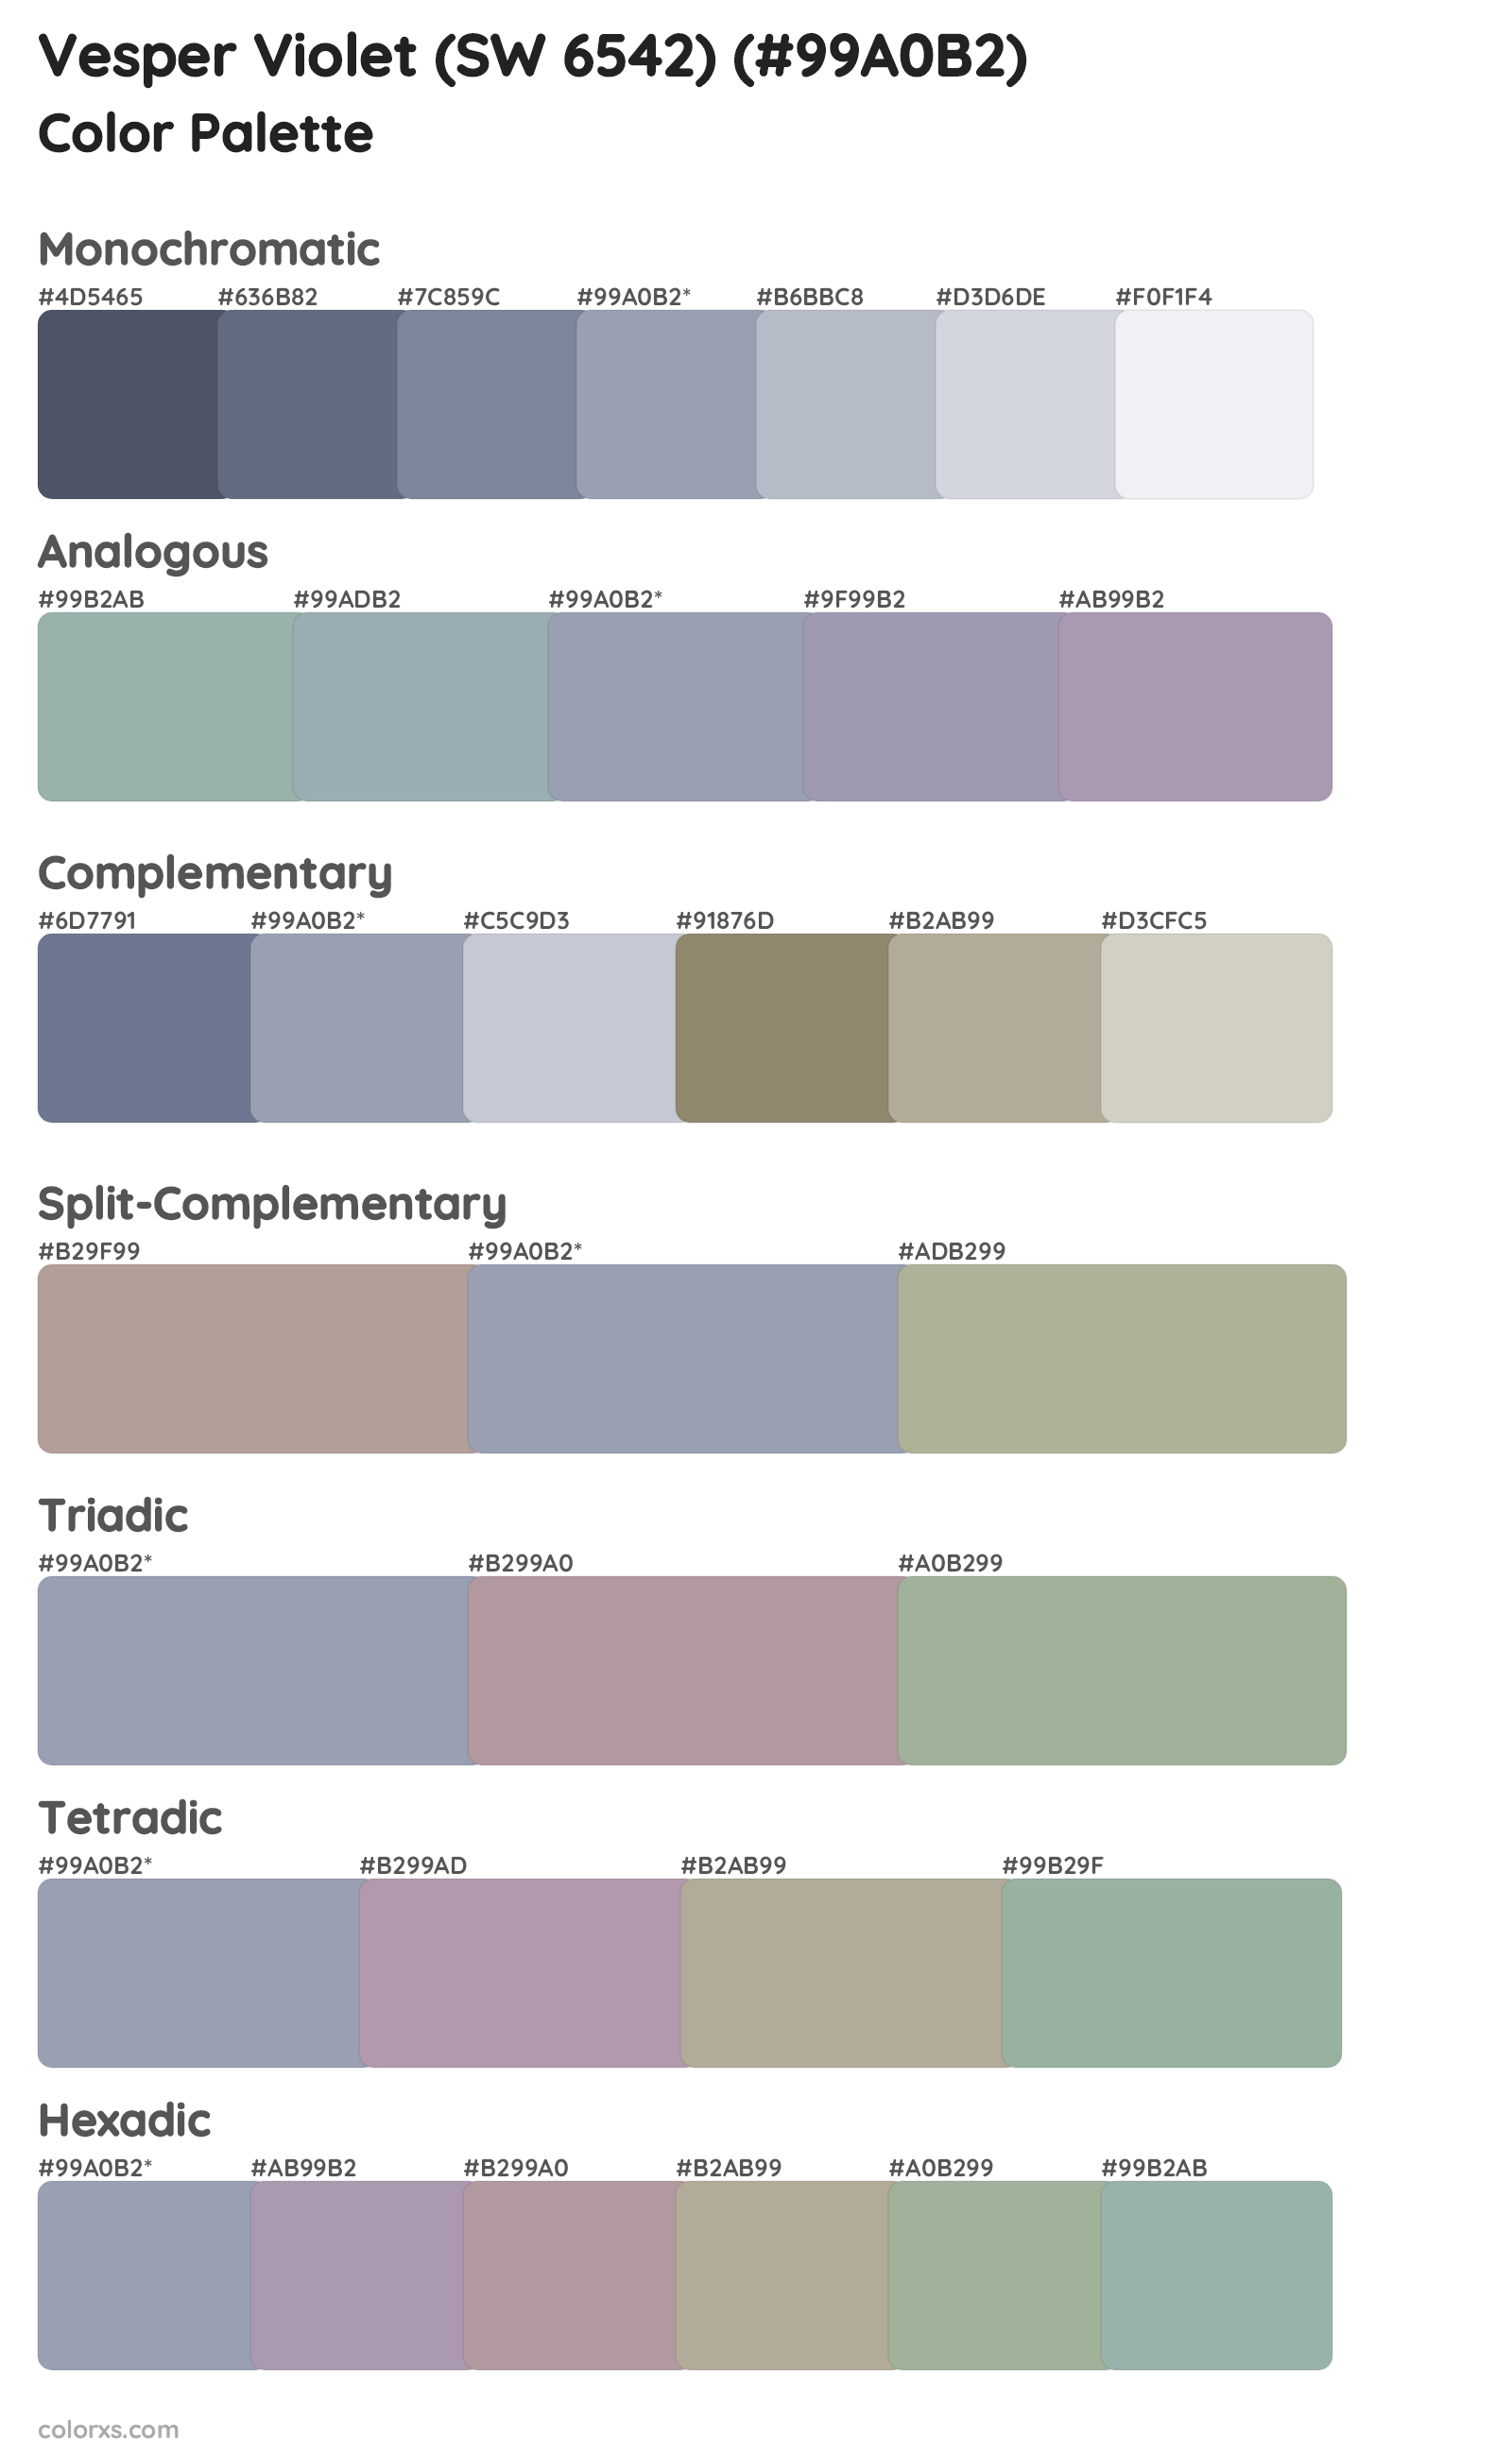 Vesper Violet (SW 6542) Color Scheme Palettes